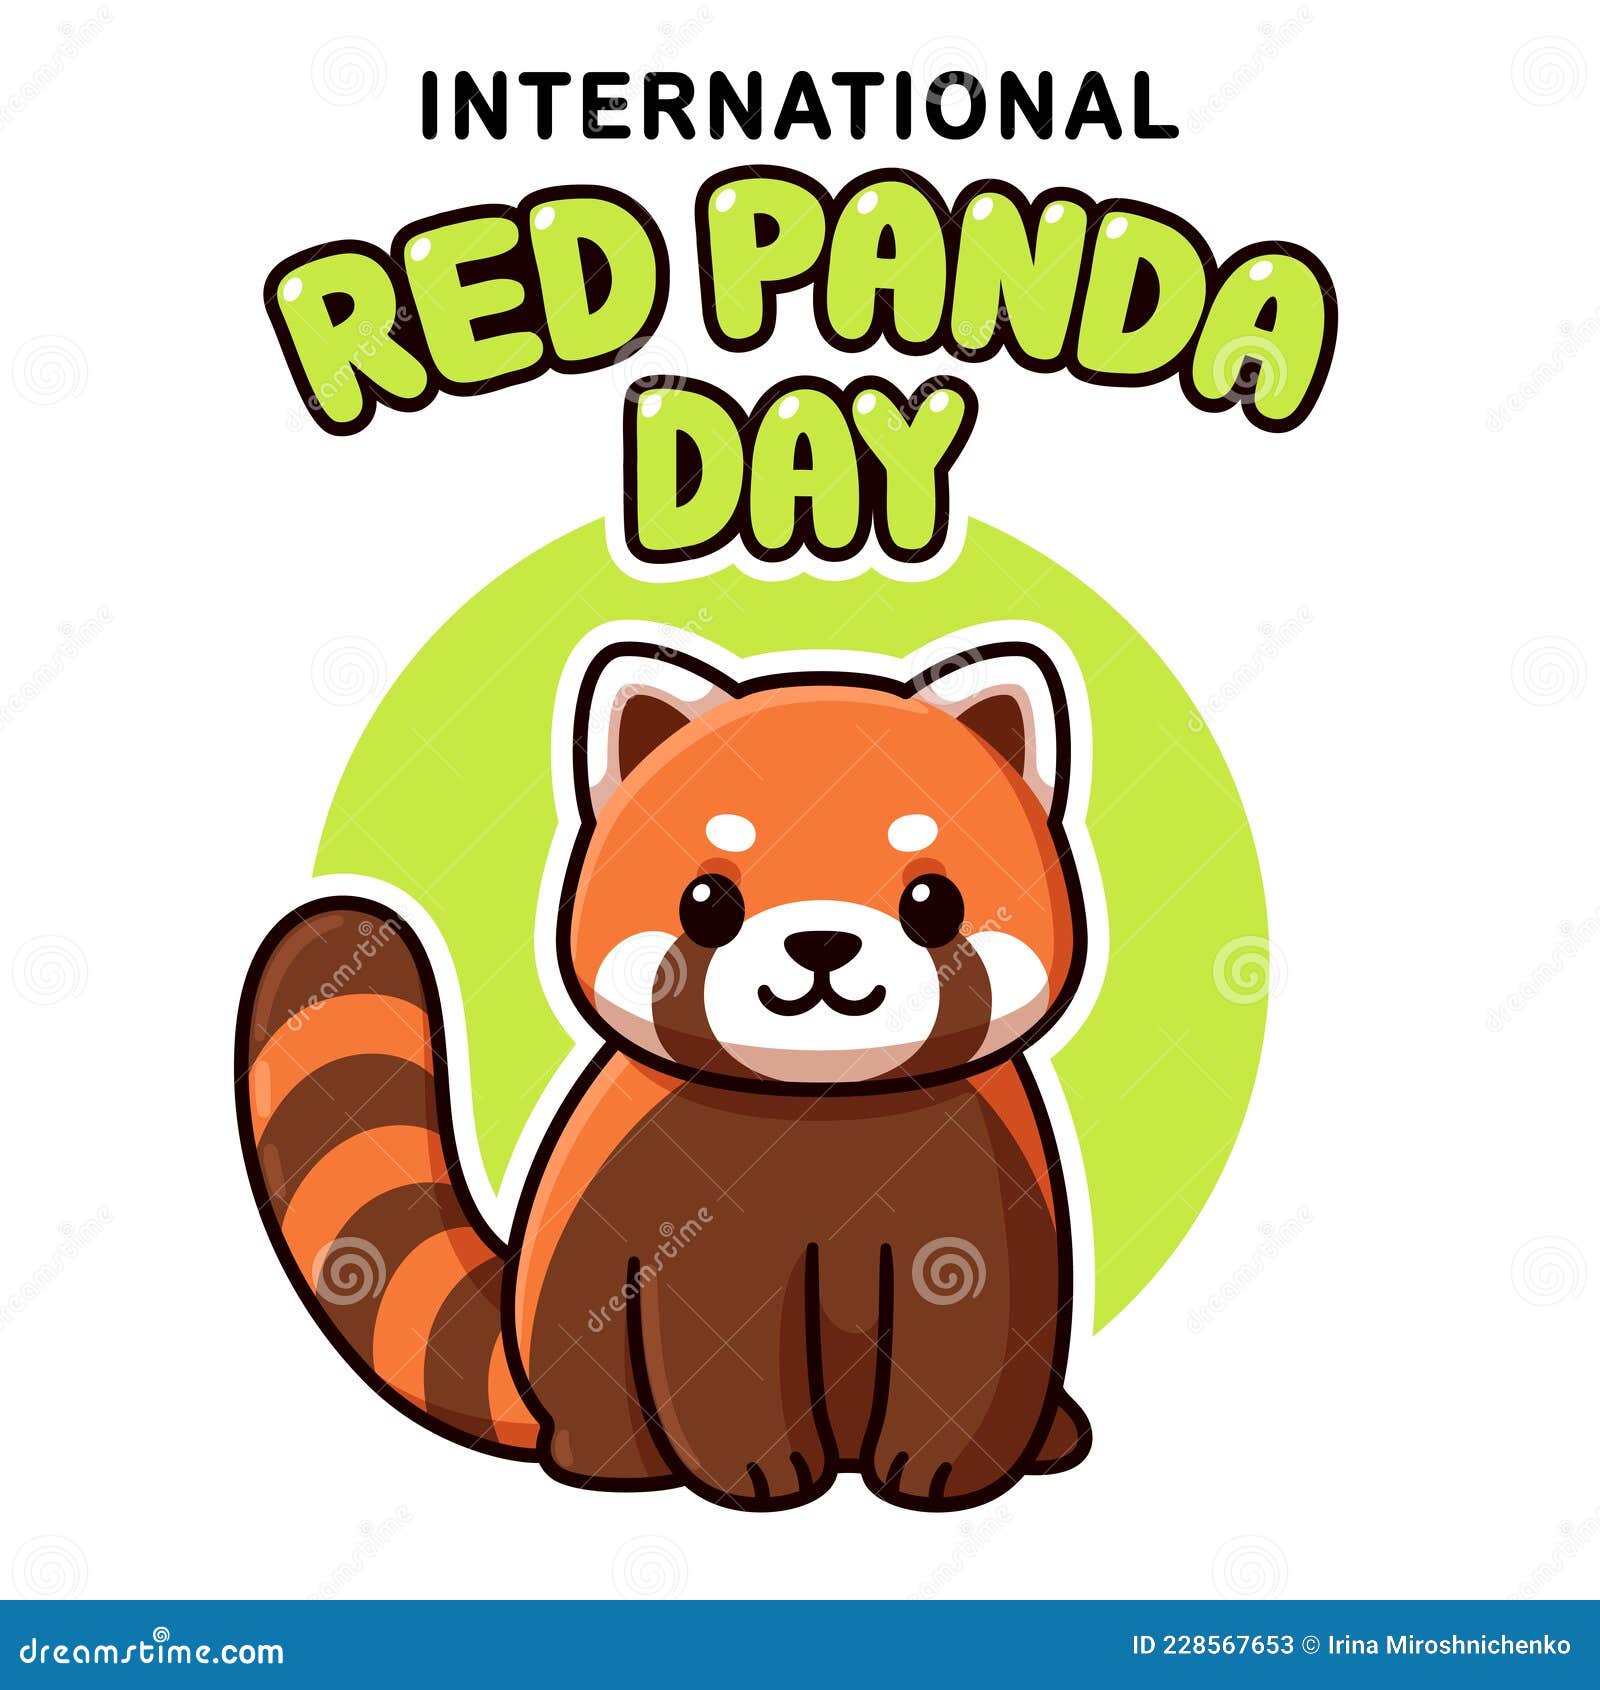 International Red Panda Day Stock Vector Illustration of